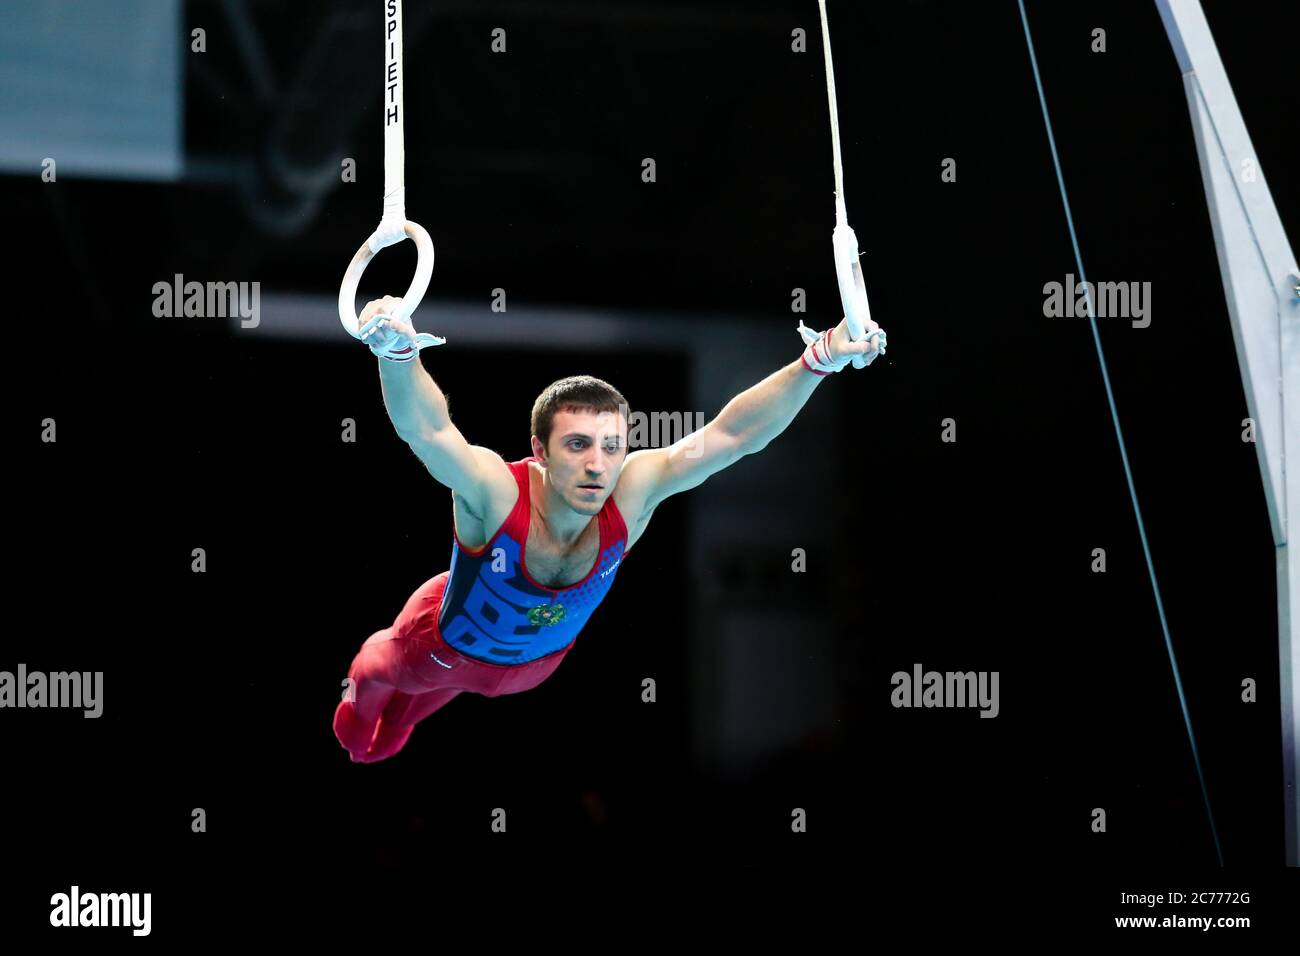 Szczecin, Poland, April 10, 2019:Artur Davtyan of Armenia competes on the rings during the European artistic gymnastics championships Stock Photo